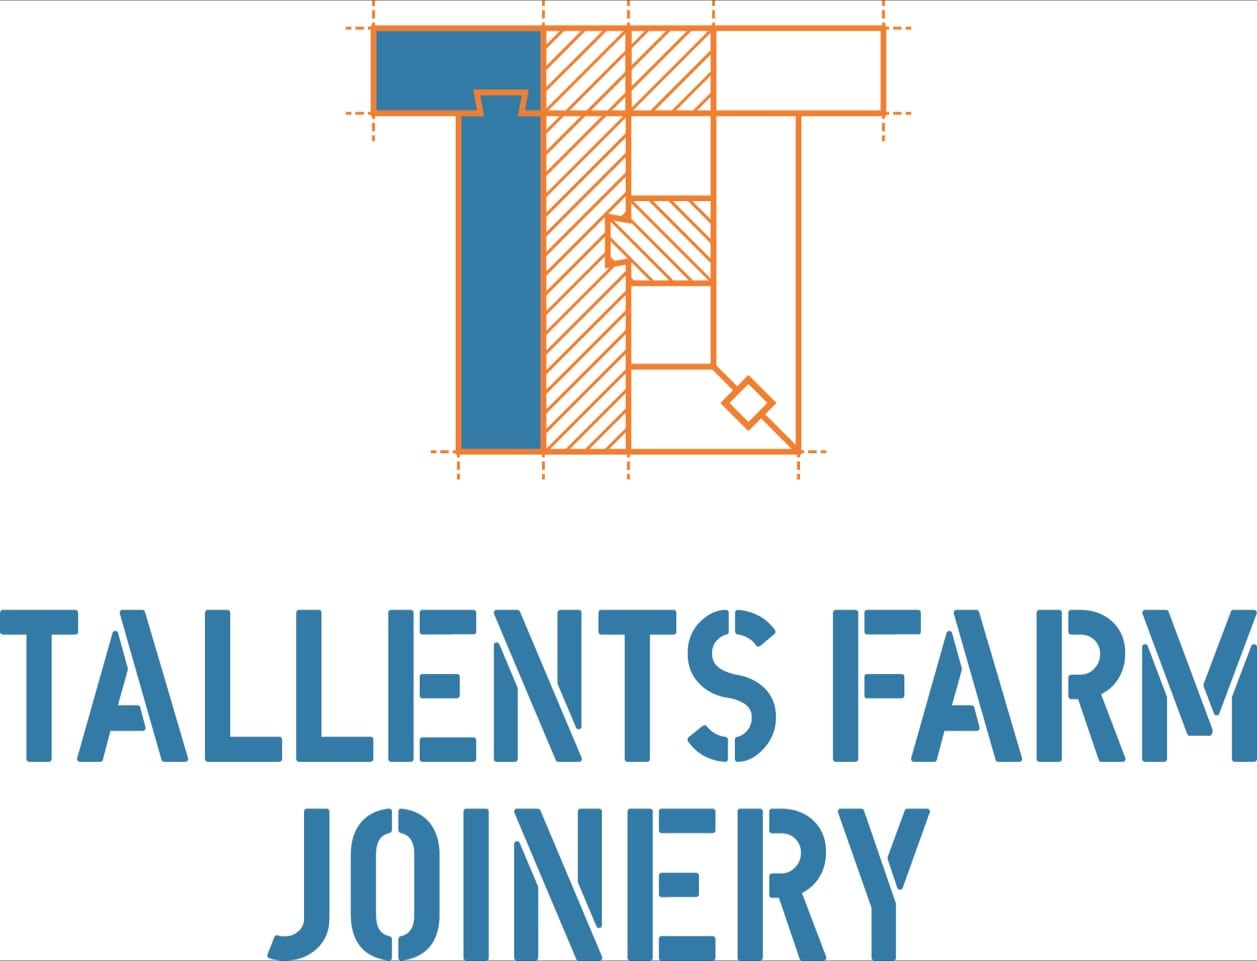 Images Tallents Farm Joinery Ltd